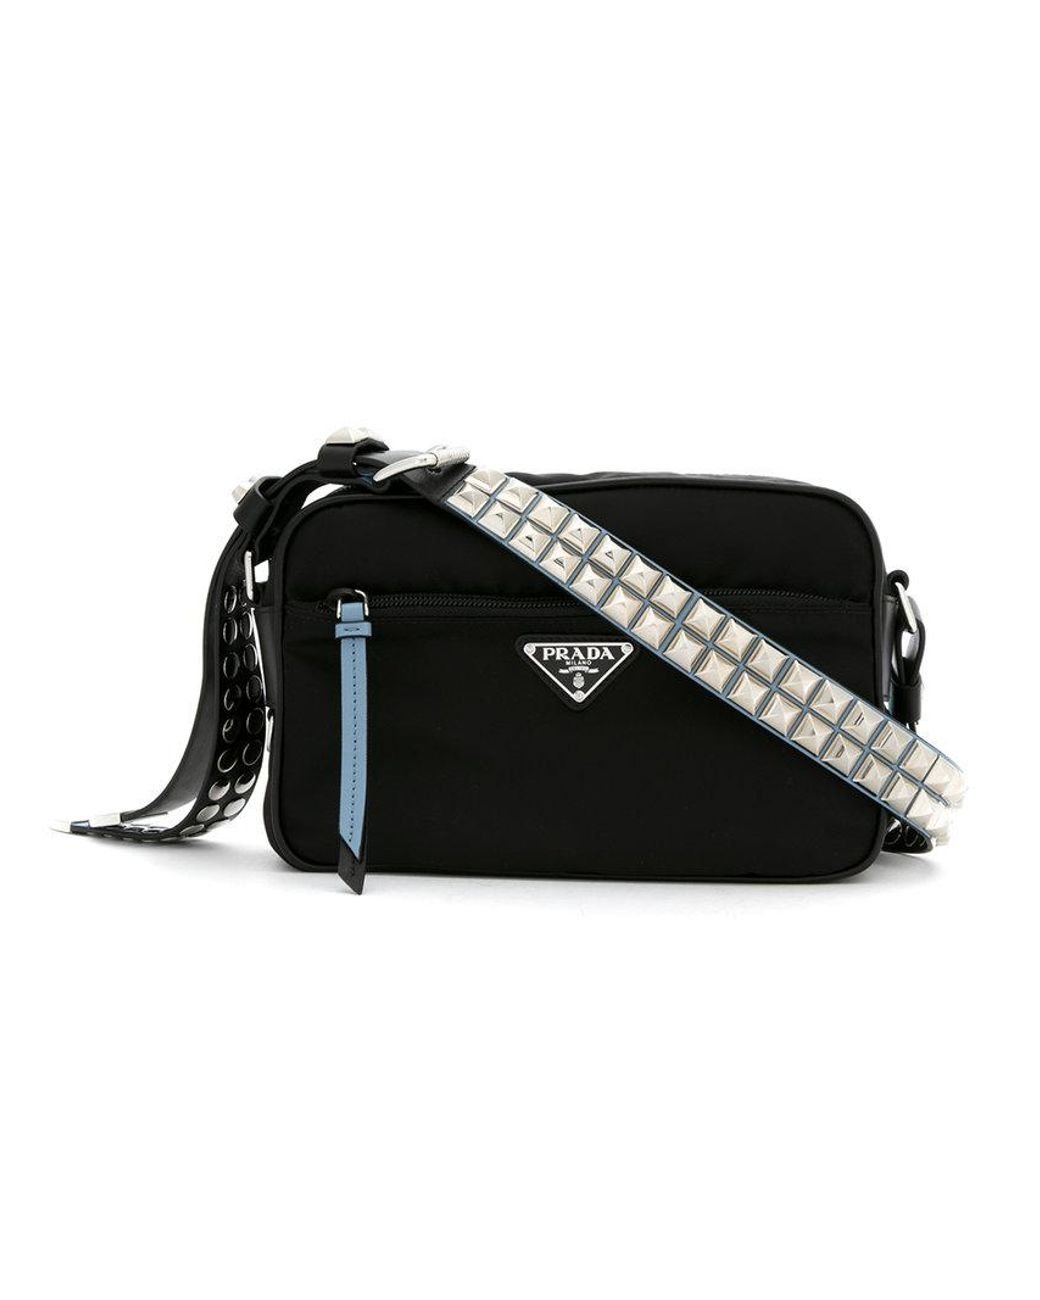 Prada Studded Crossbody Bag in Black | Lyst